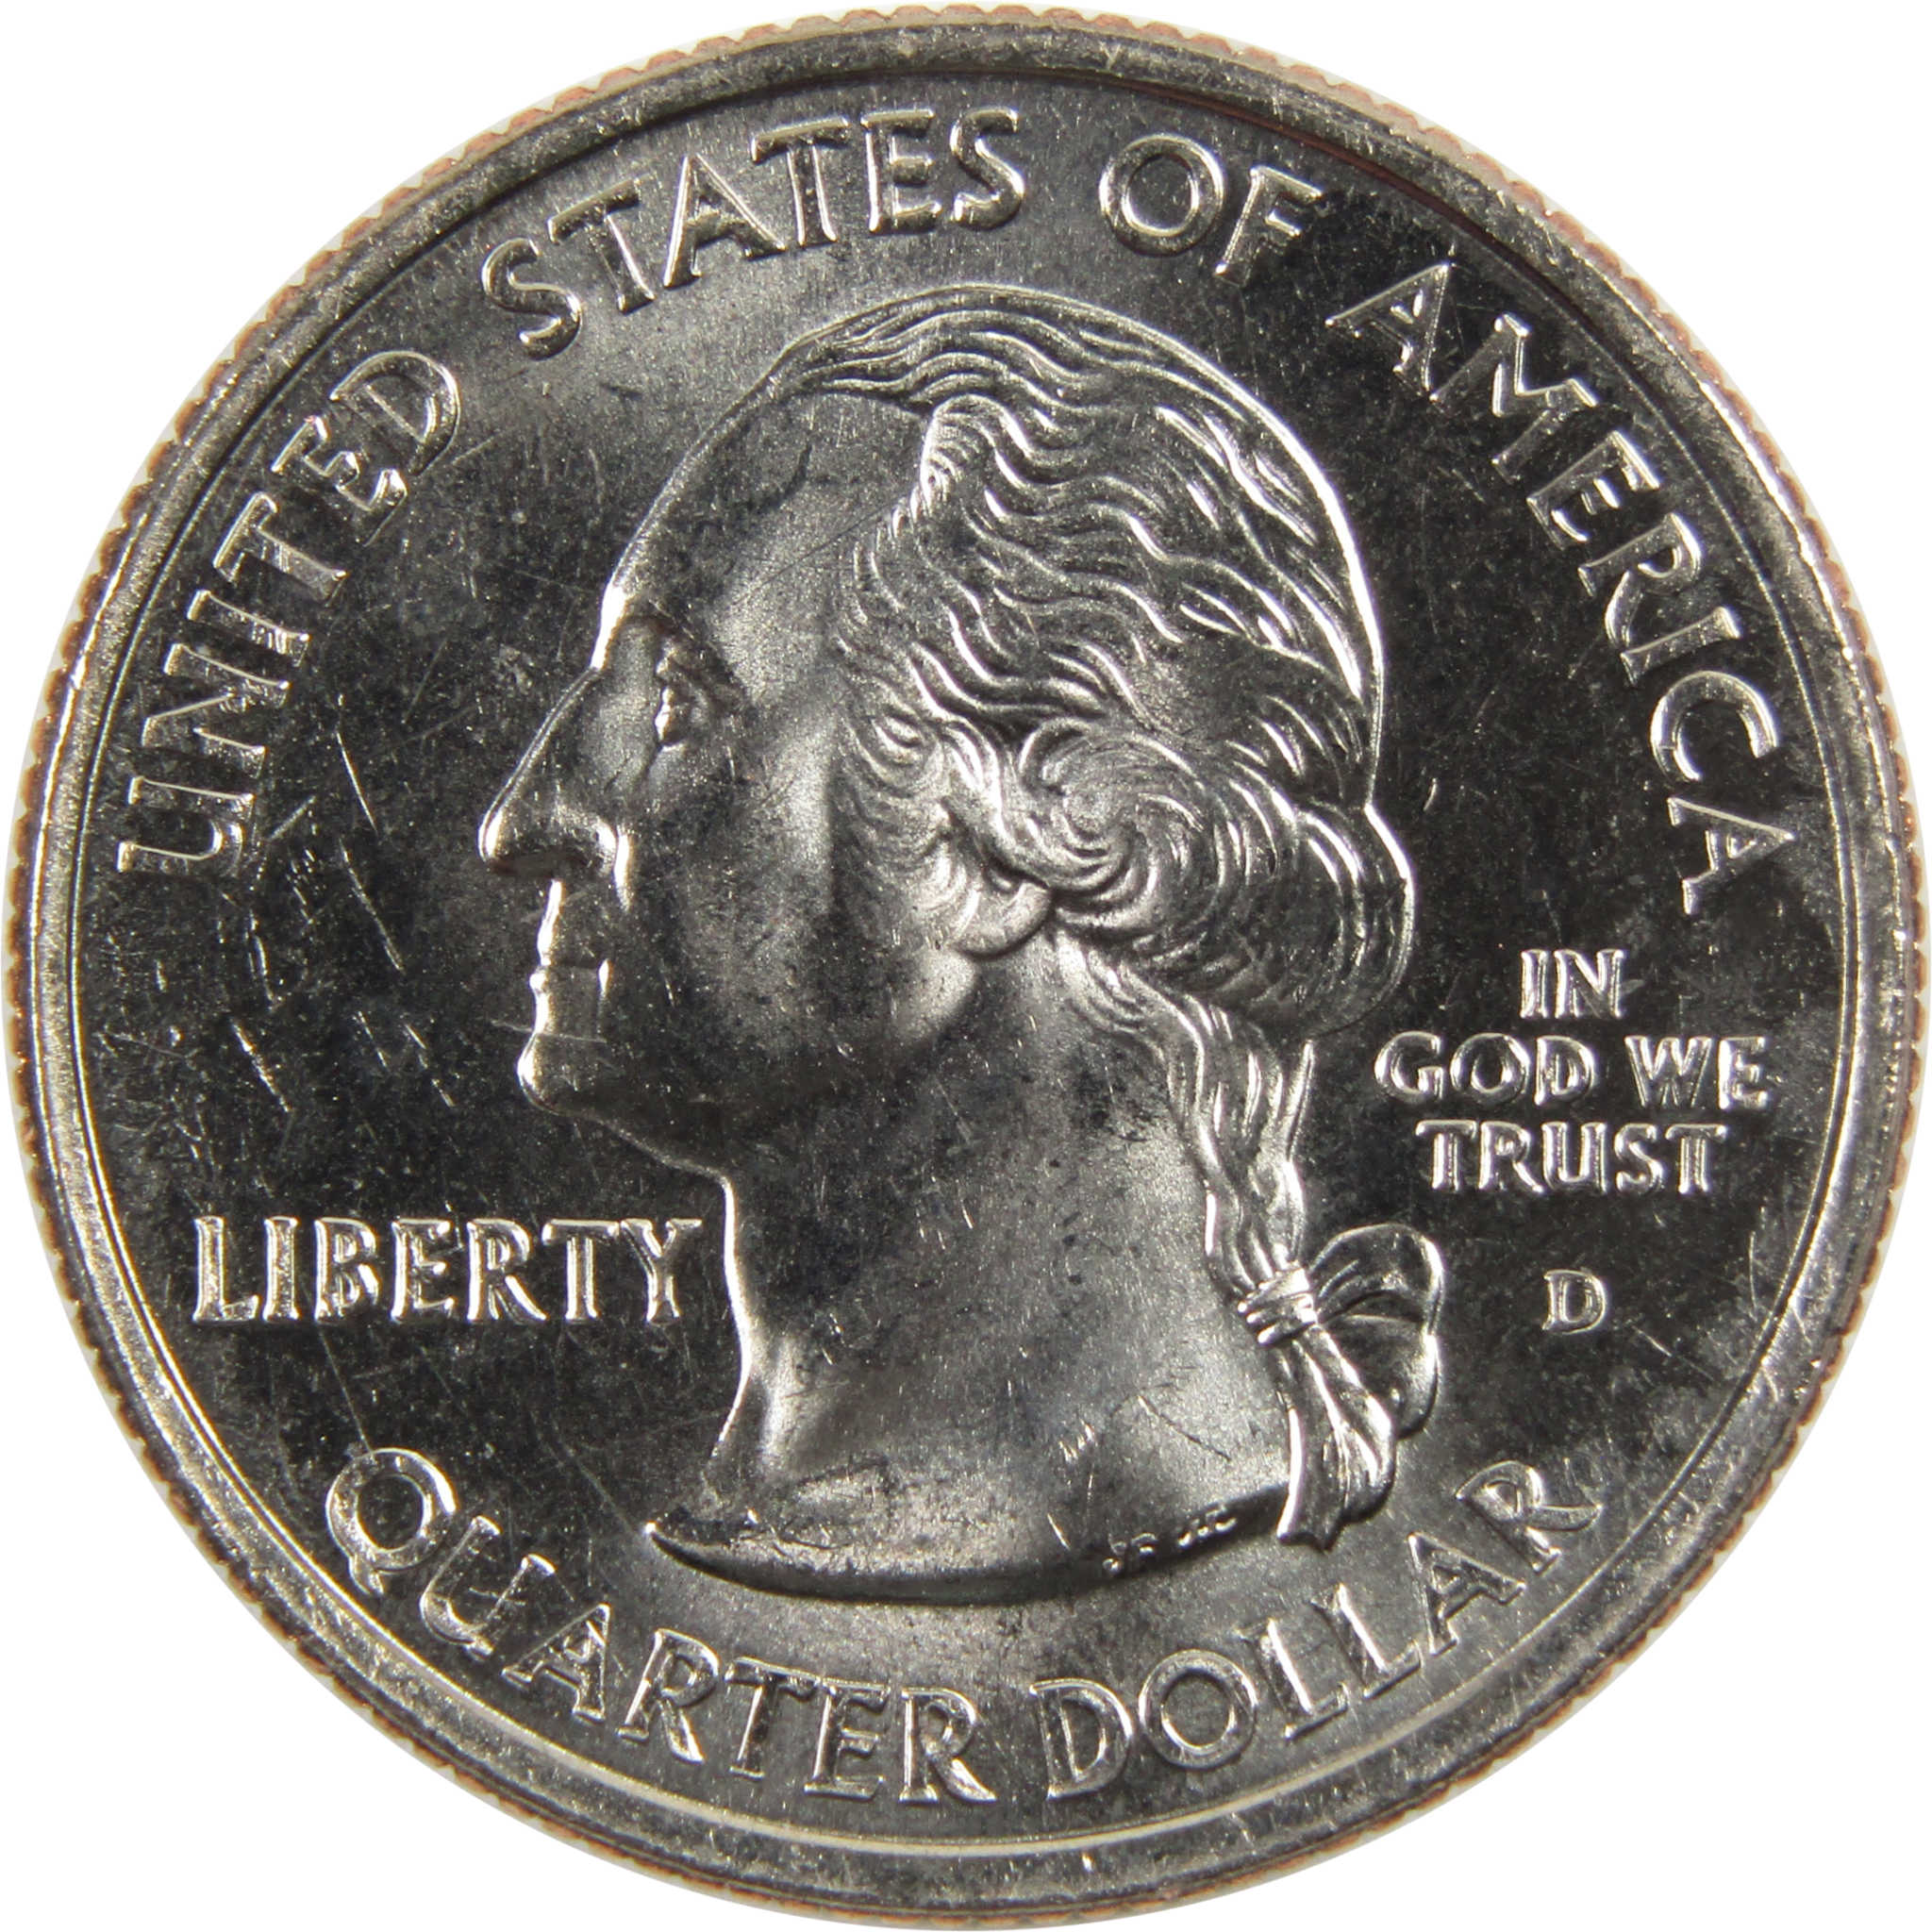 2001 D Rhode Island State Quarter BU Uncirculated Clad 25c Coin